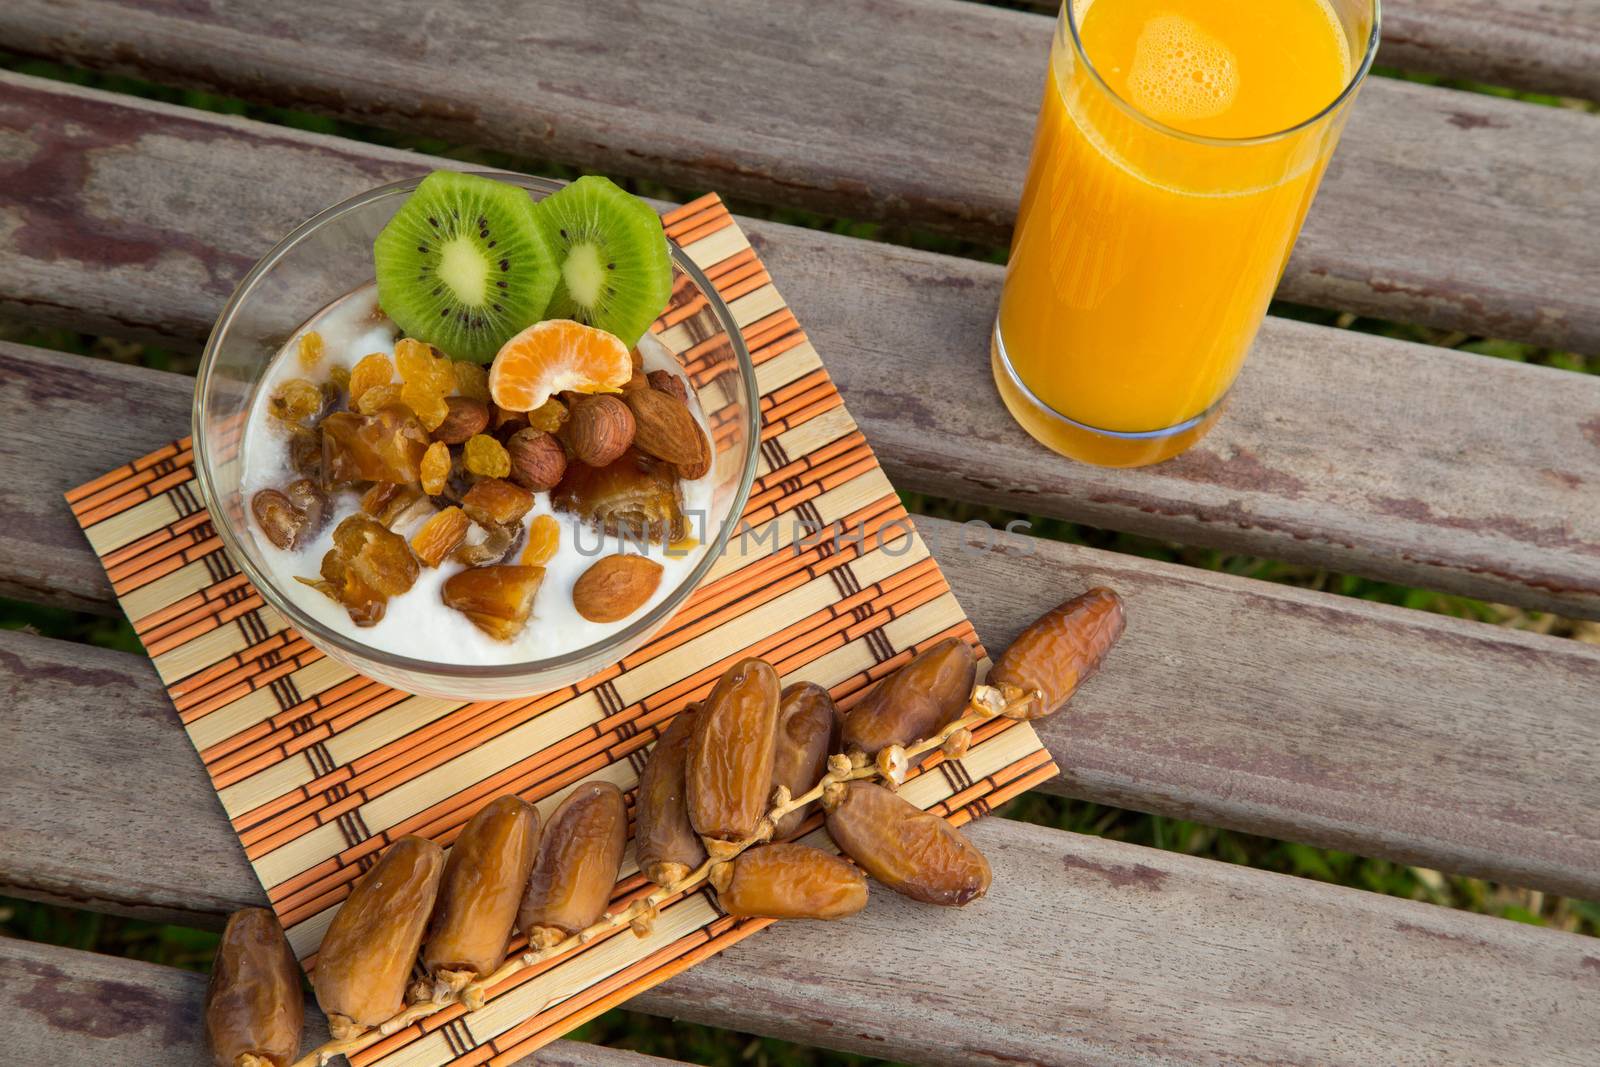 Healthy breakfast - natural yogurt with dried fruits and orange juice